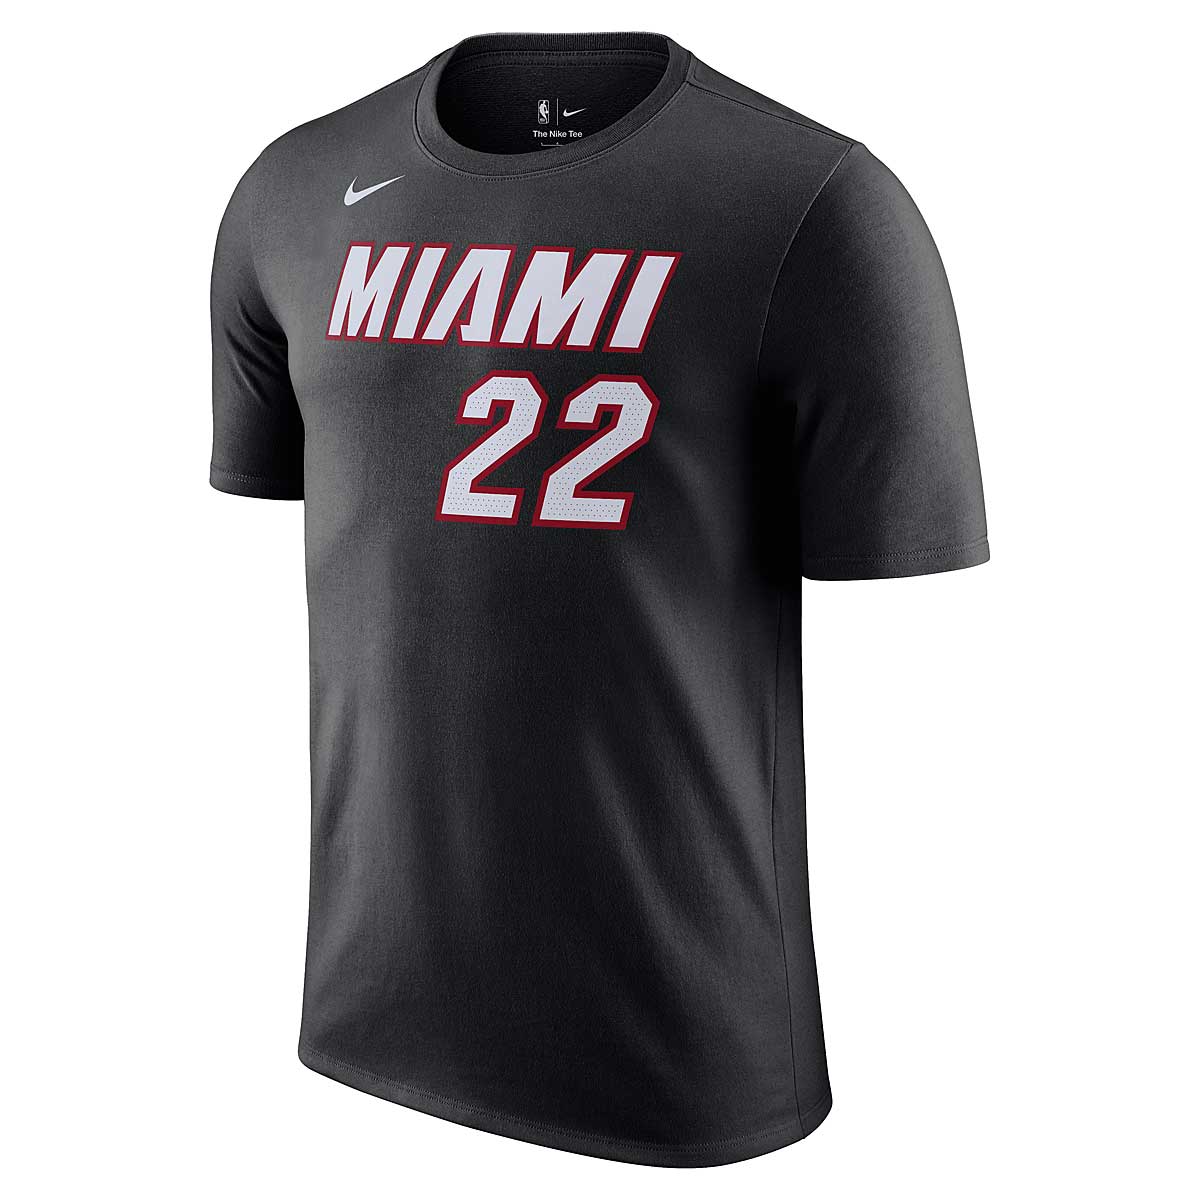 Image of Nike NBA Miami Heat N&n T-shirt Jimmy Butler, Schwarz